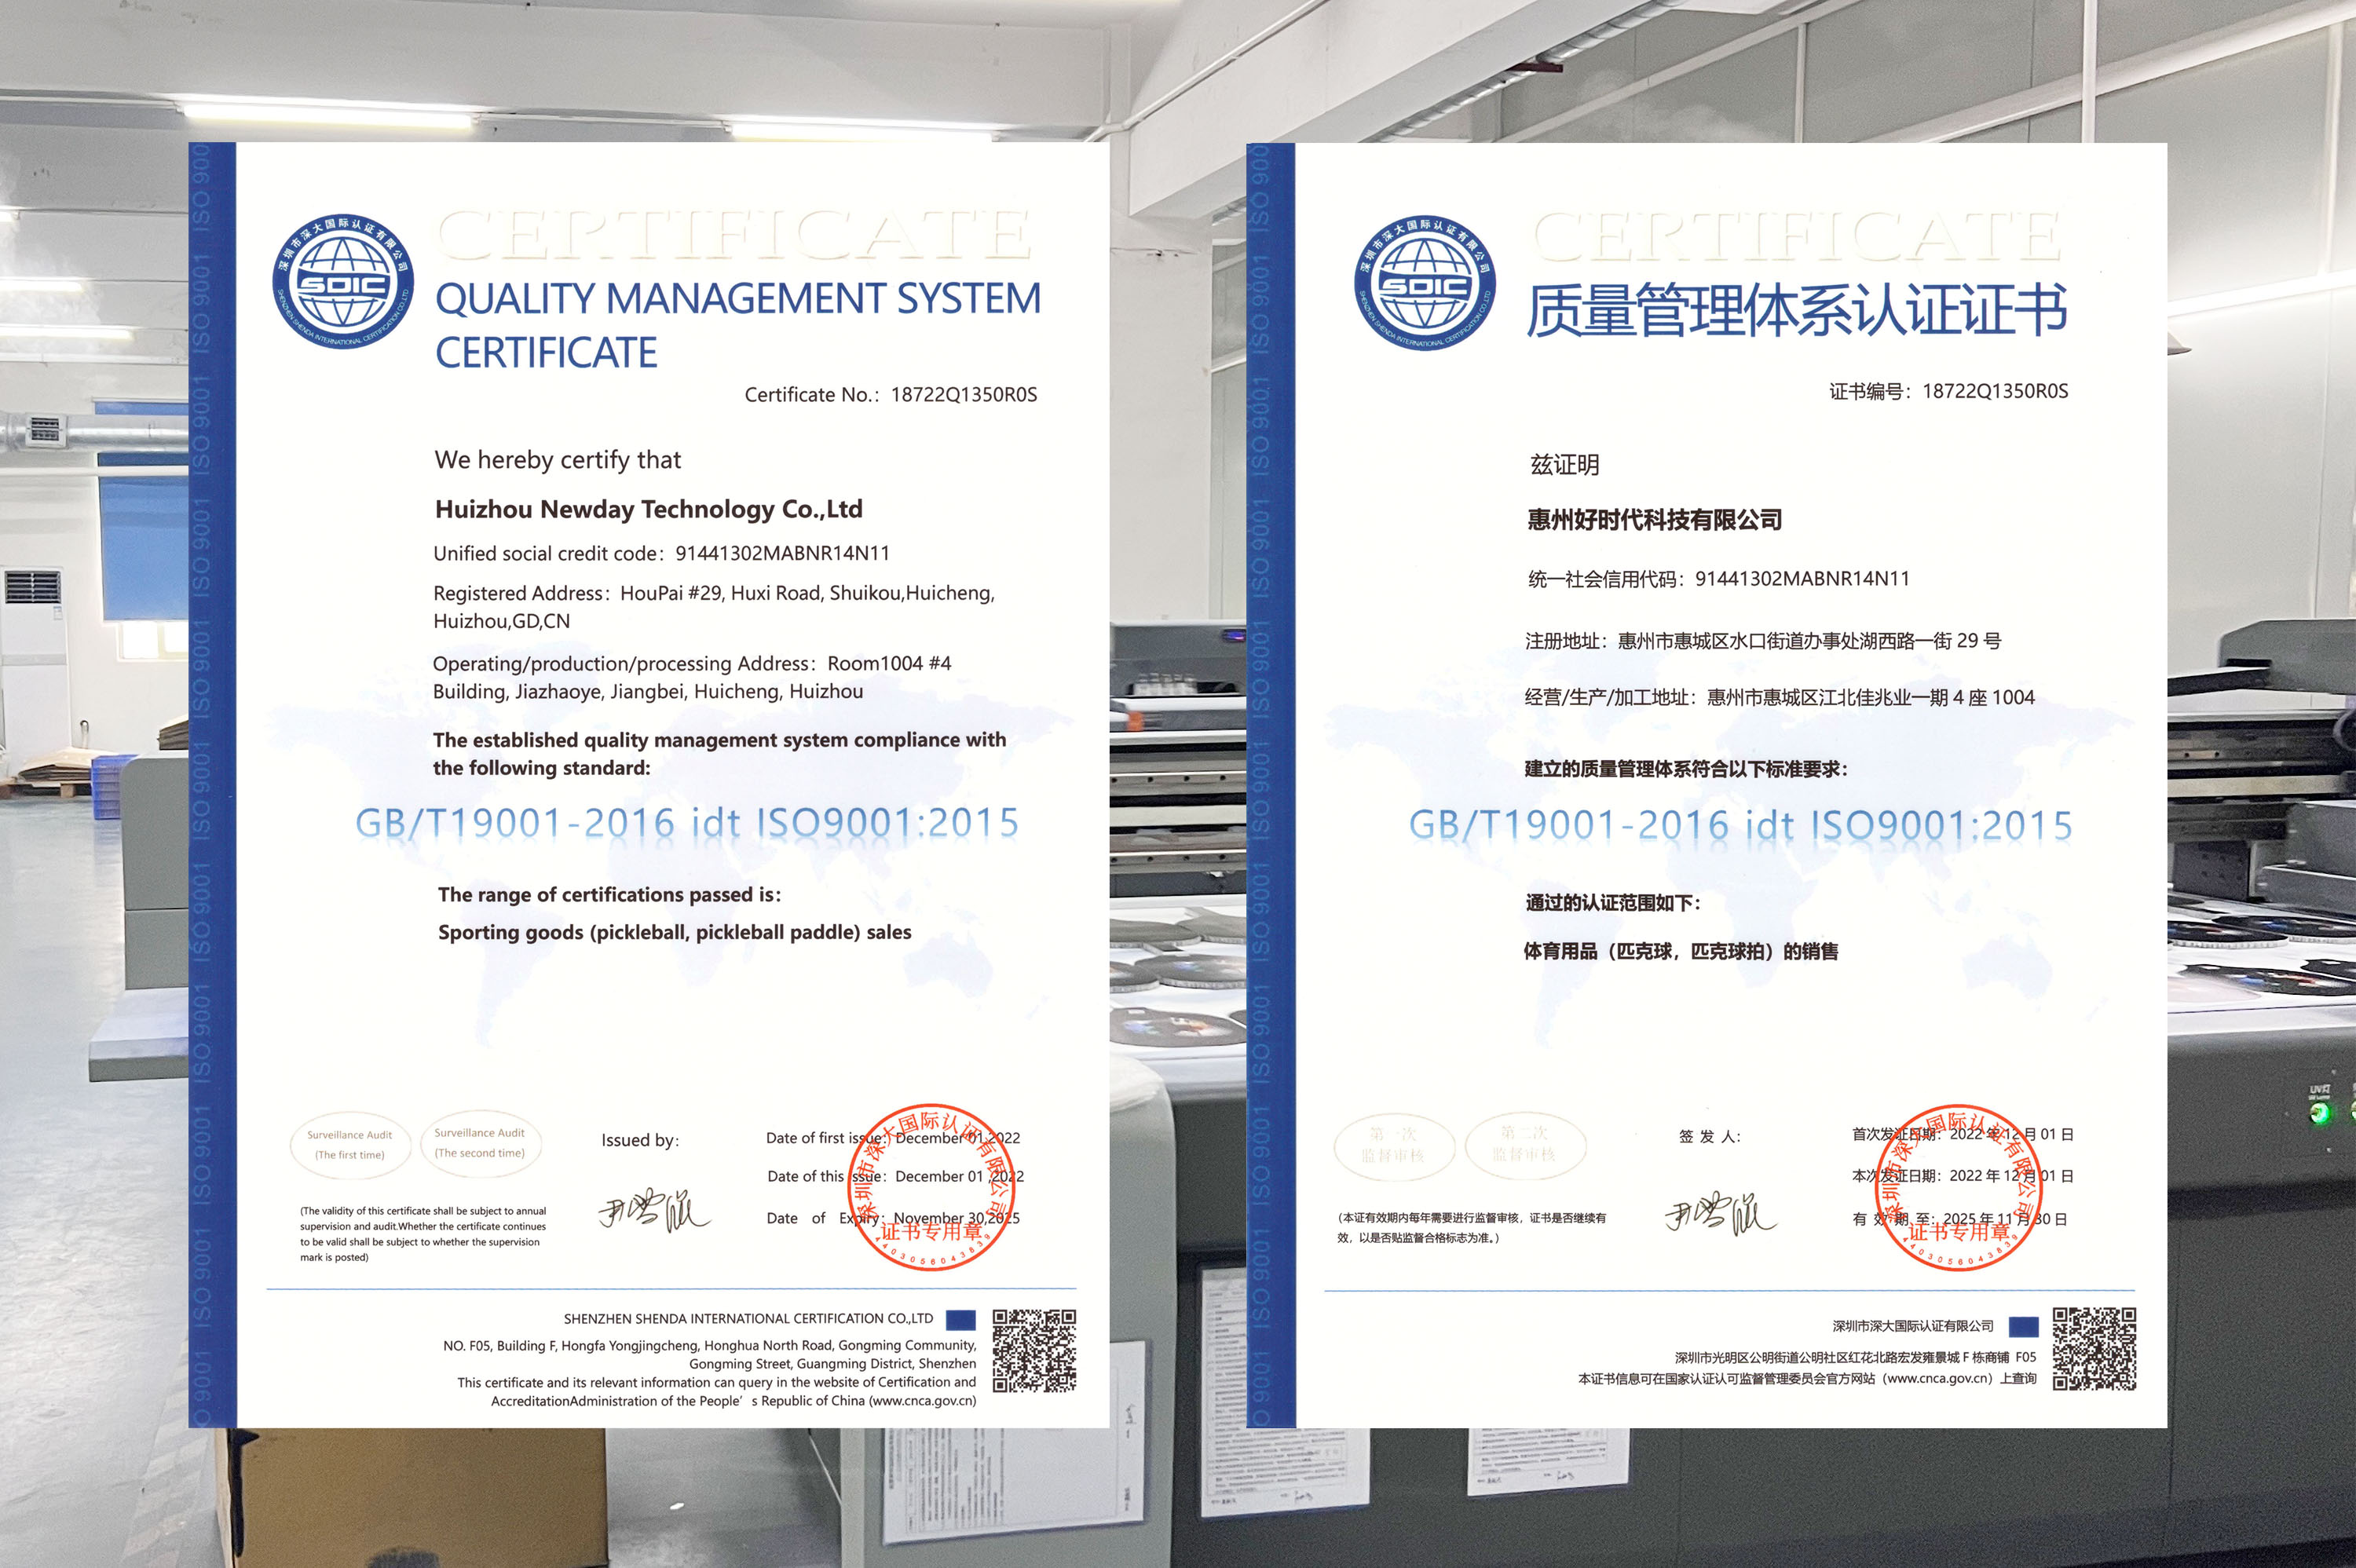 ISO9001 Certificate, we got it ! 